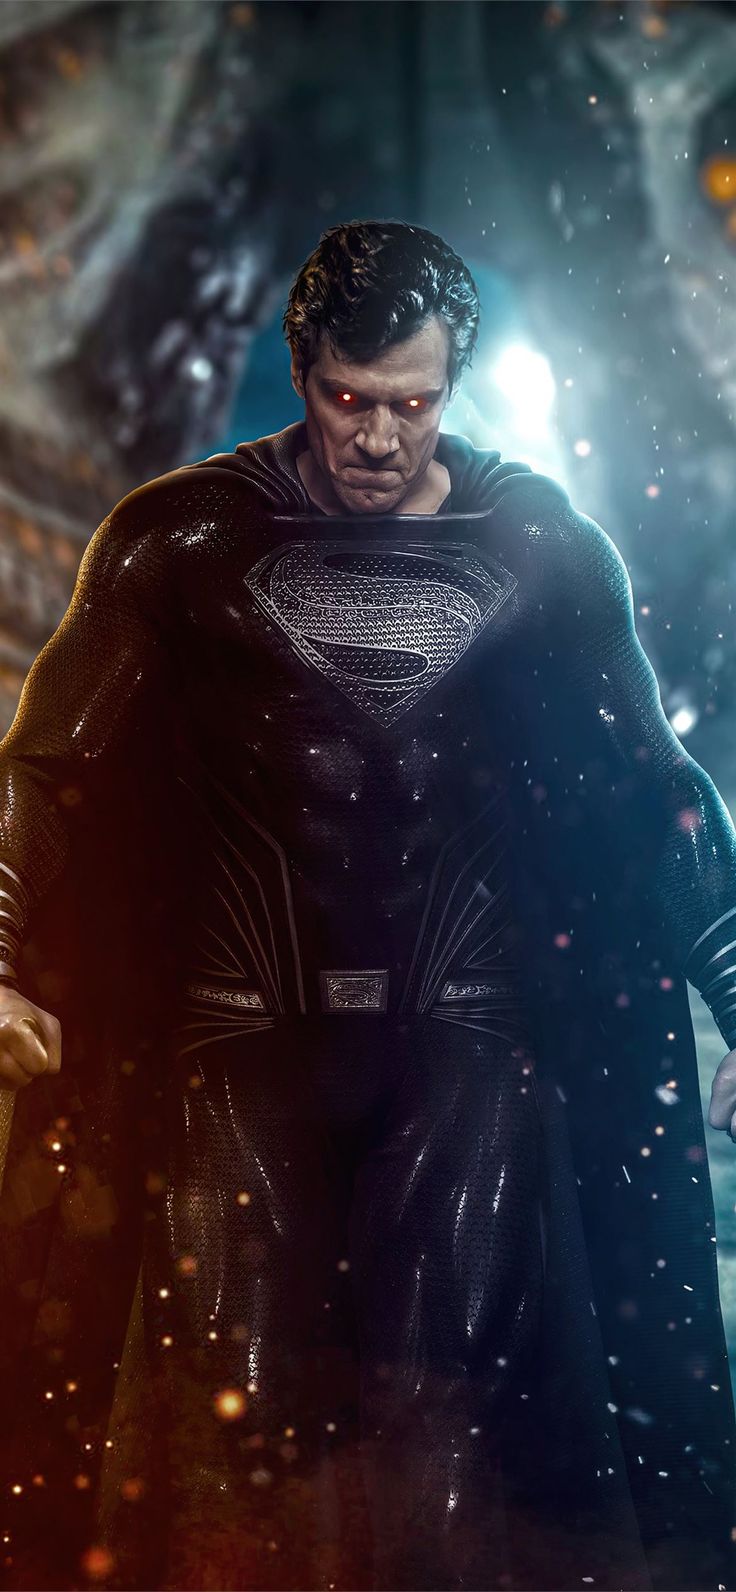 justice league superman black suit 4k JusticeLeague superman